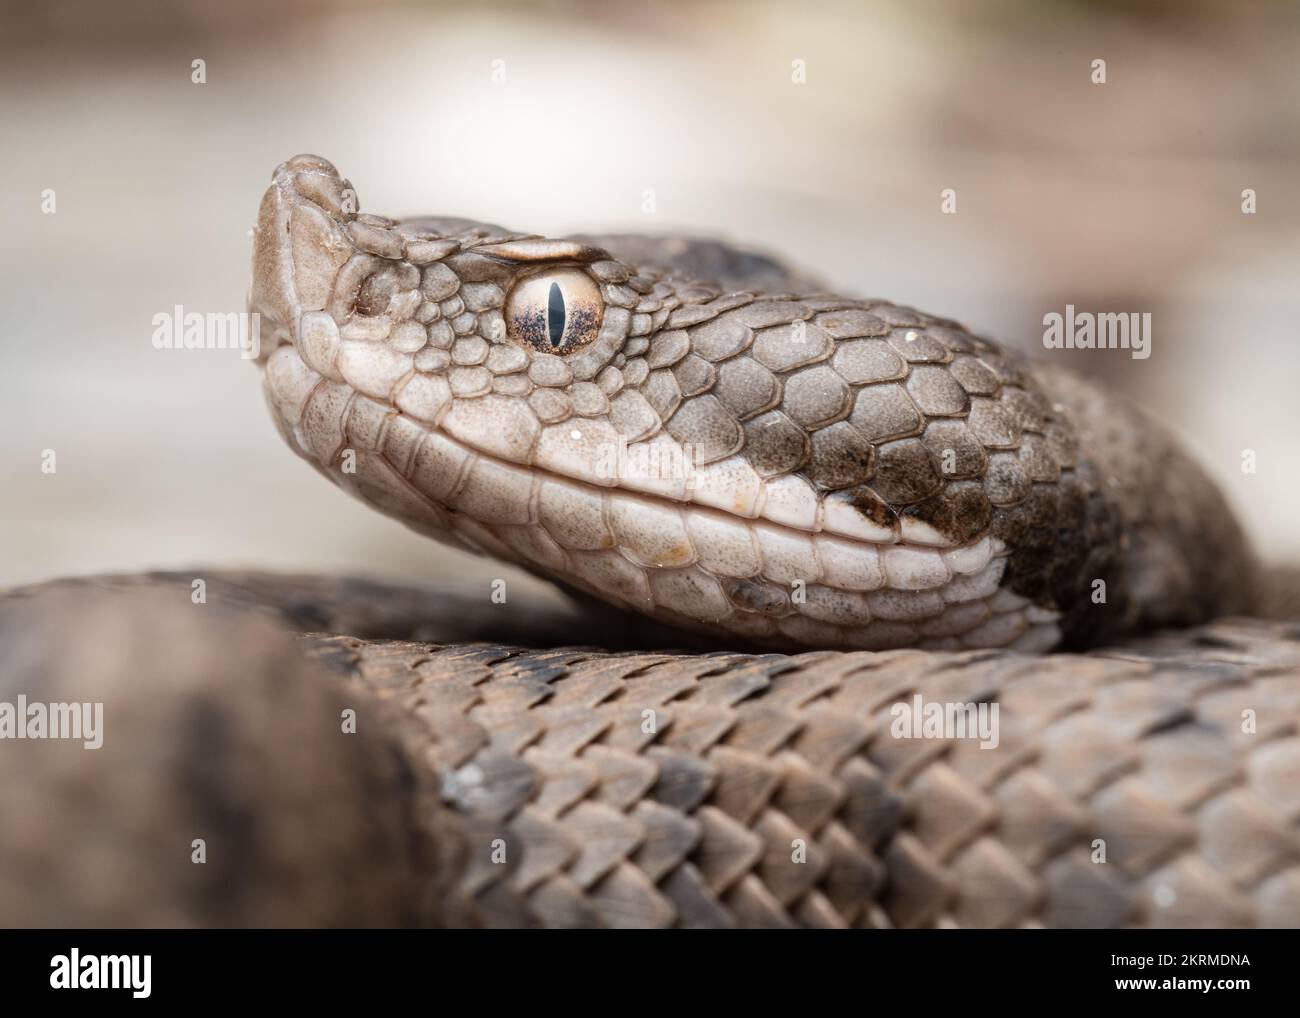 Close up view of lataste's viper (Vipera latastei) portrait Stock Photo